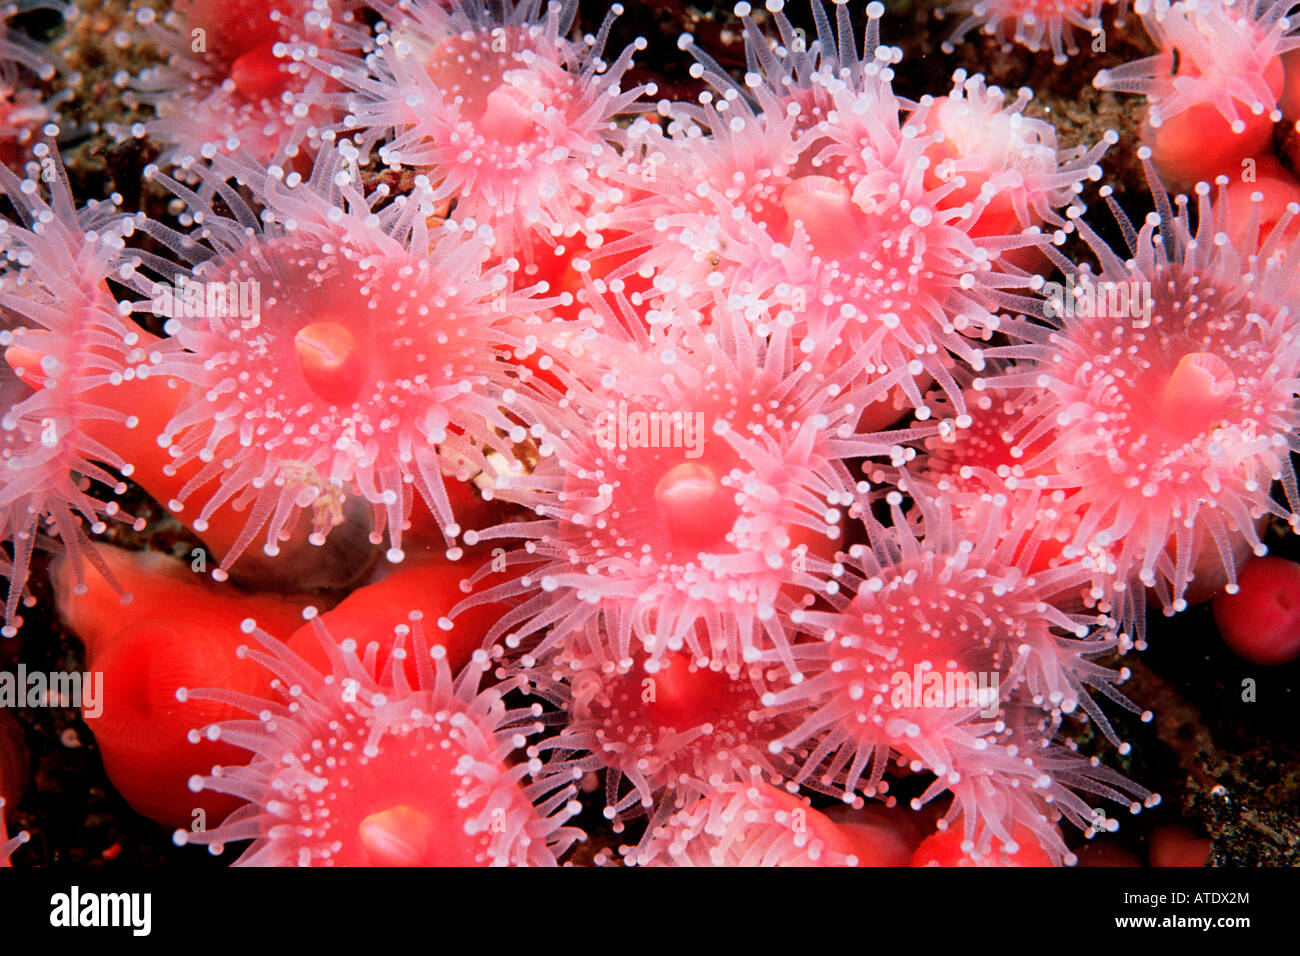 Club tipped anemone Corynactis californica California Eastern Pacific Ocean Stock Photo